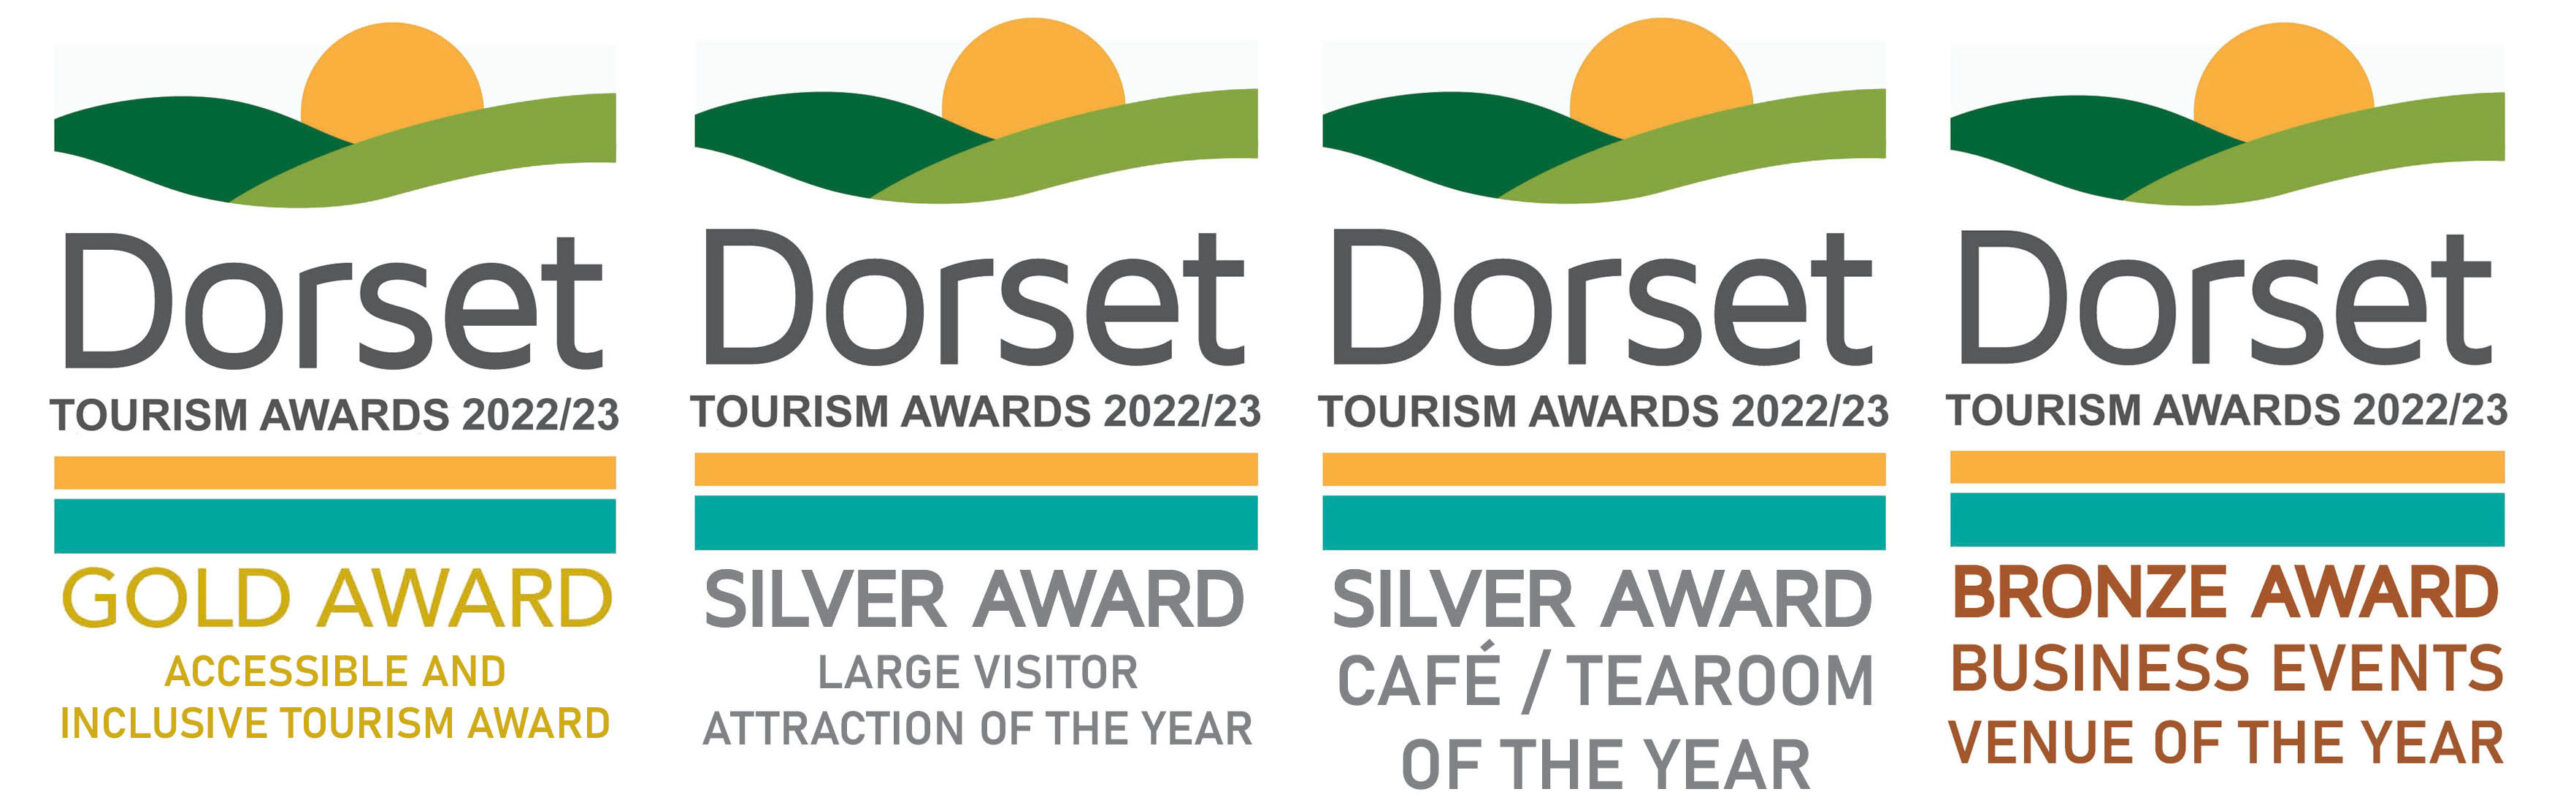 Dorset Tourism Awards 22-23